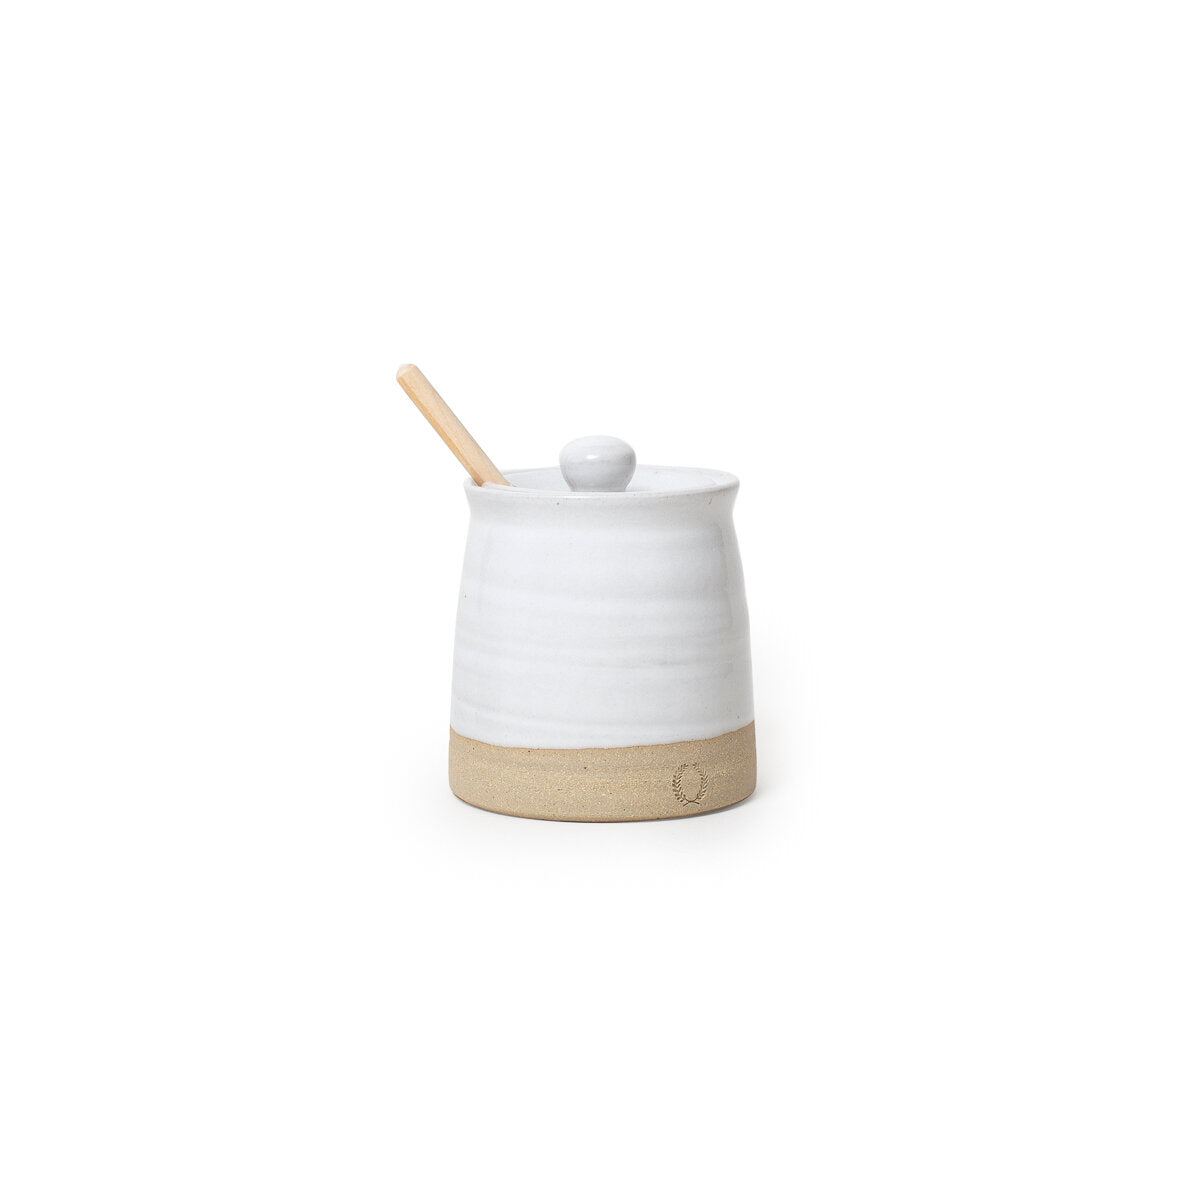 Farmhouse Pottery Honey Pot with Dipper